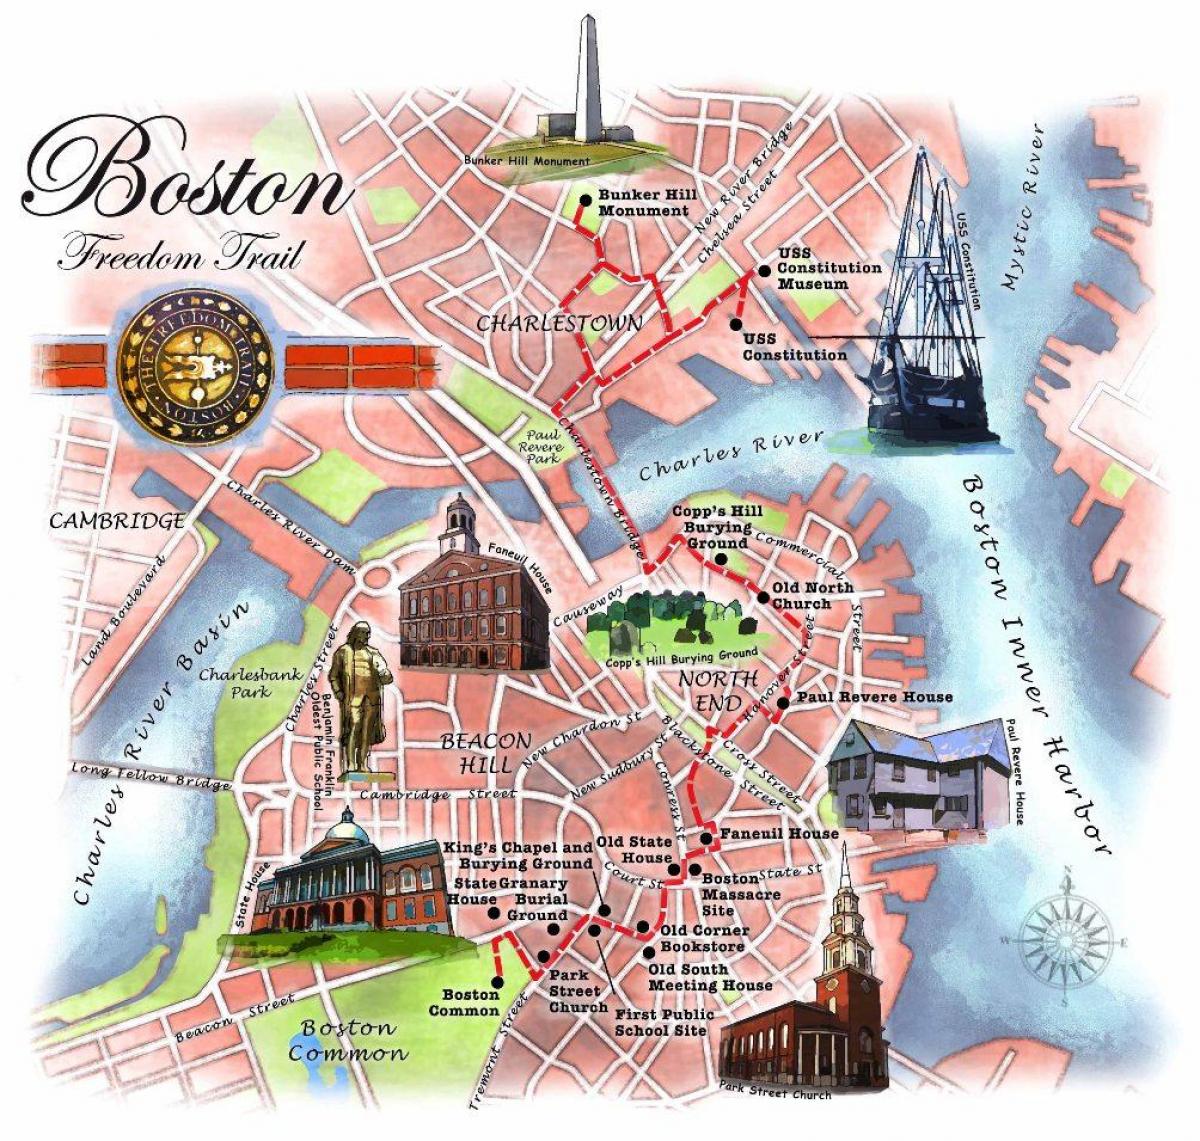 peta dari Boston freedom trail